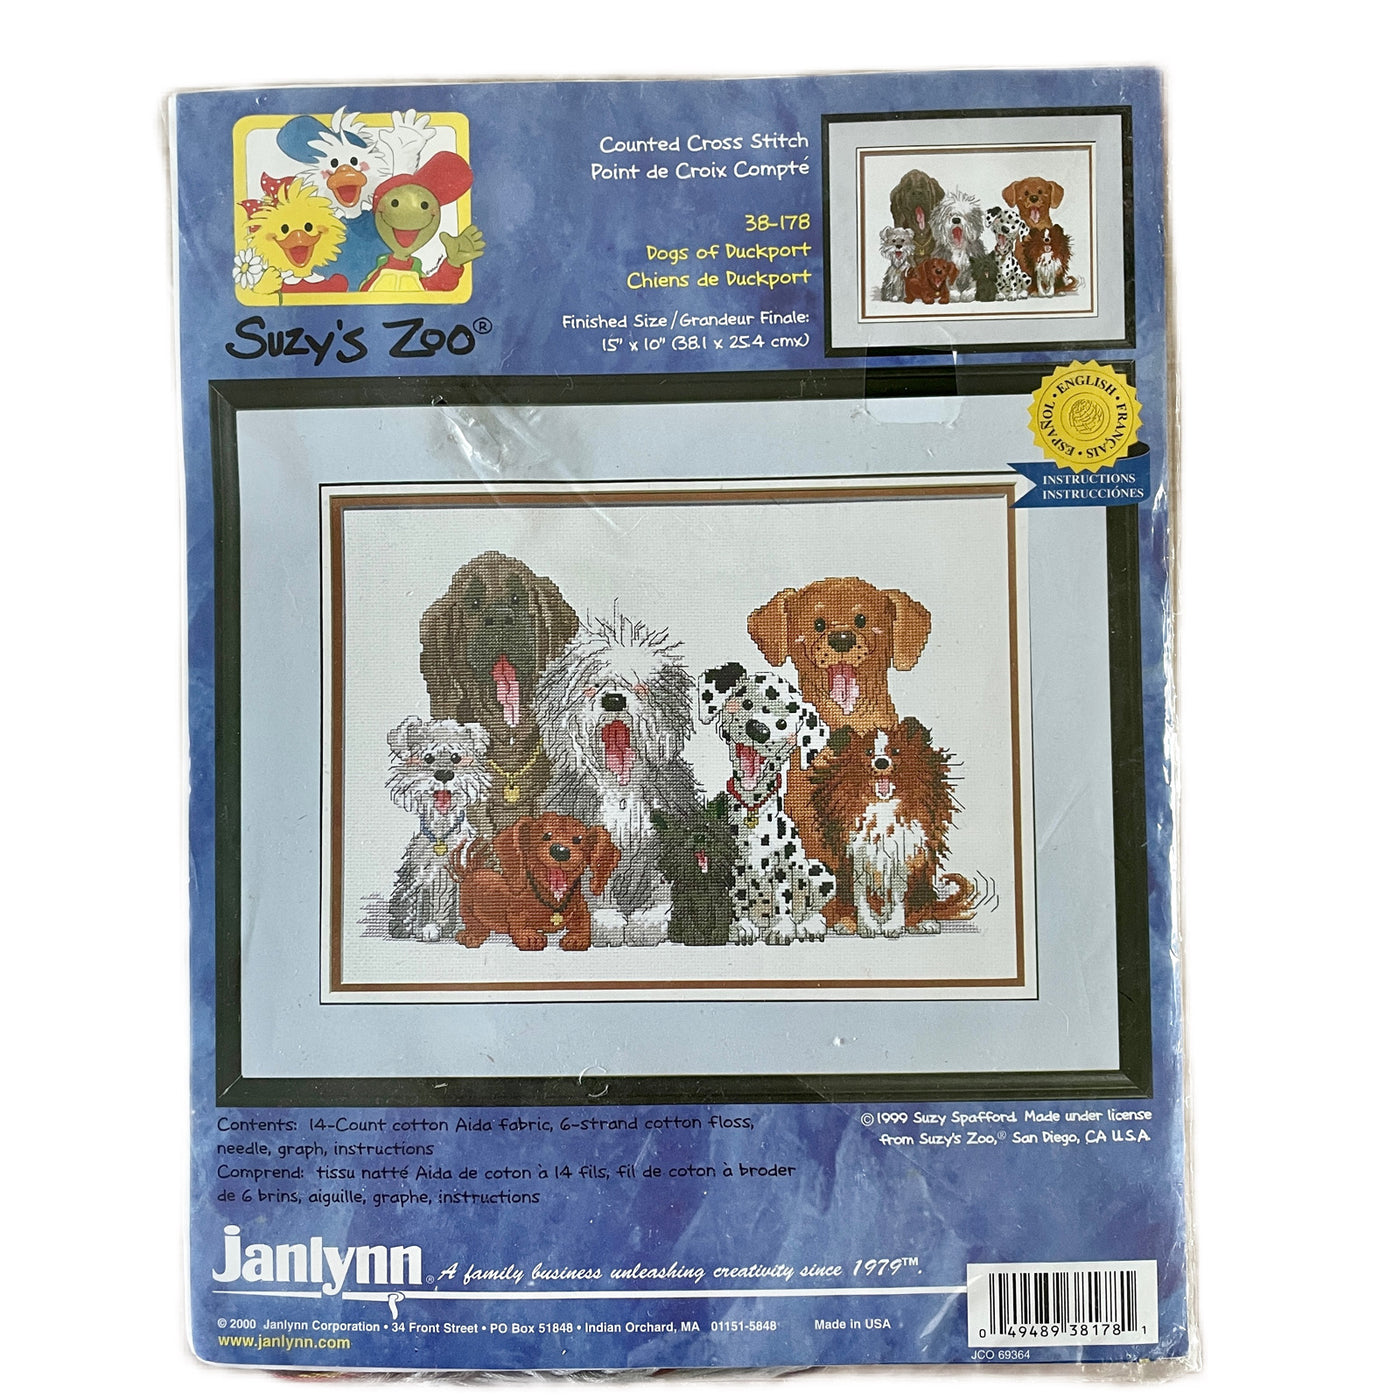 Kids' Dog Cross Stitch Kit